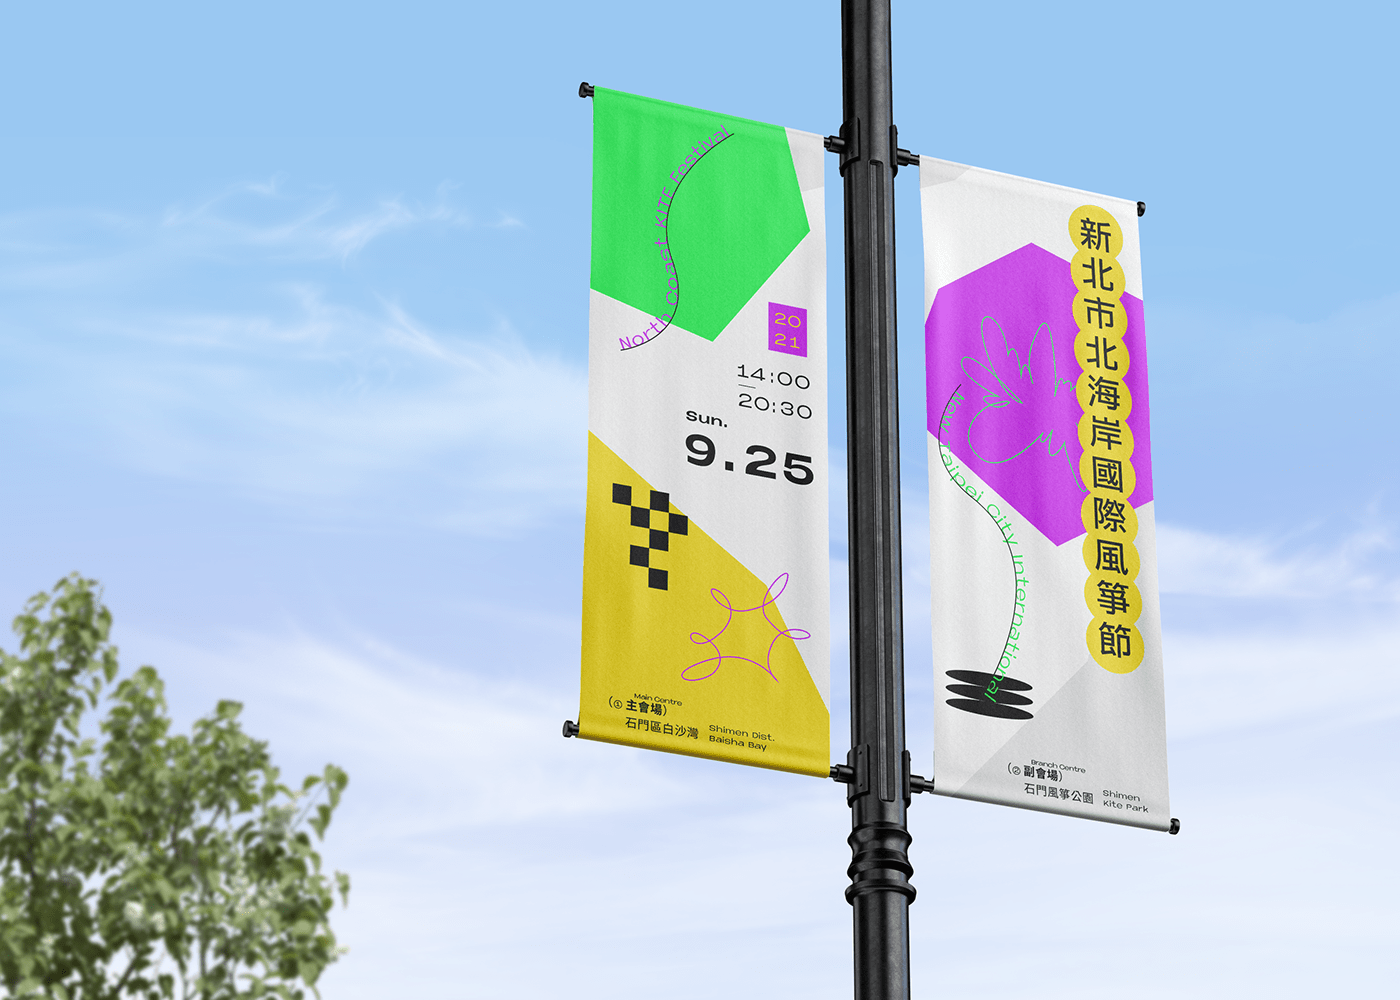 festival graphic identity International Kite visual design イベント デザイン ポスター 活動識別